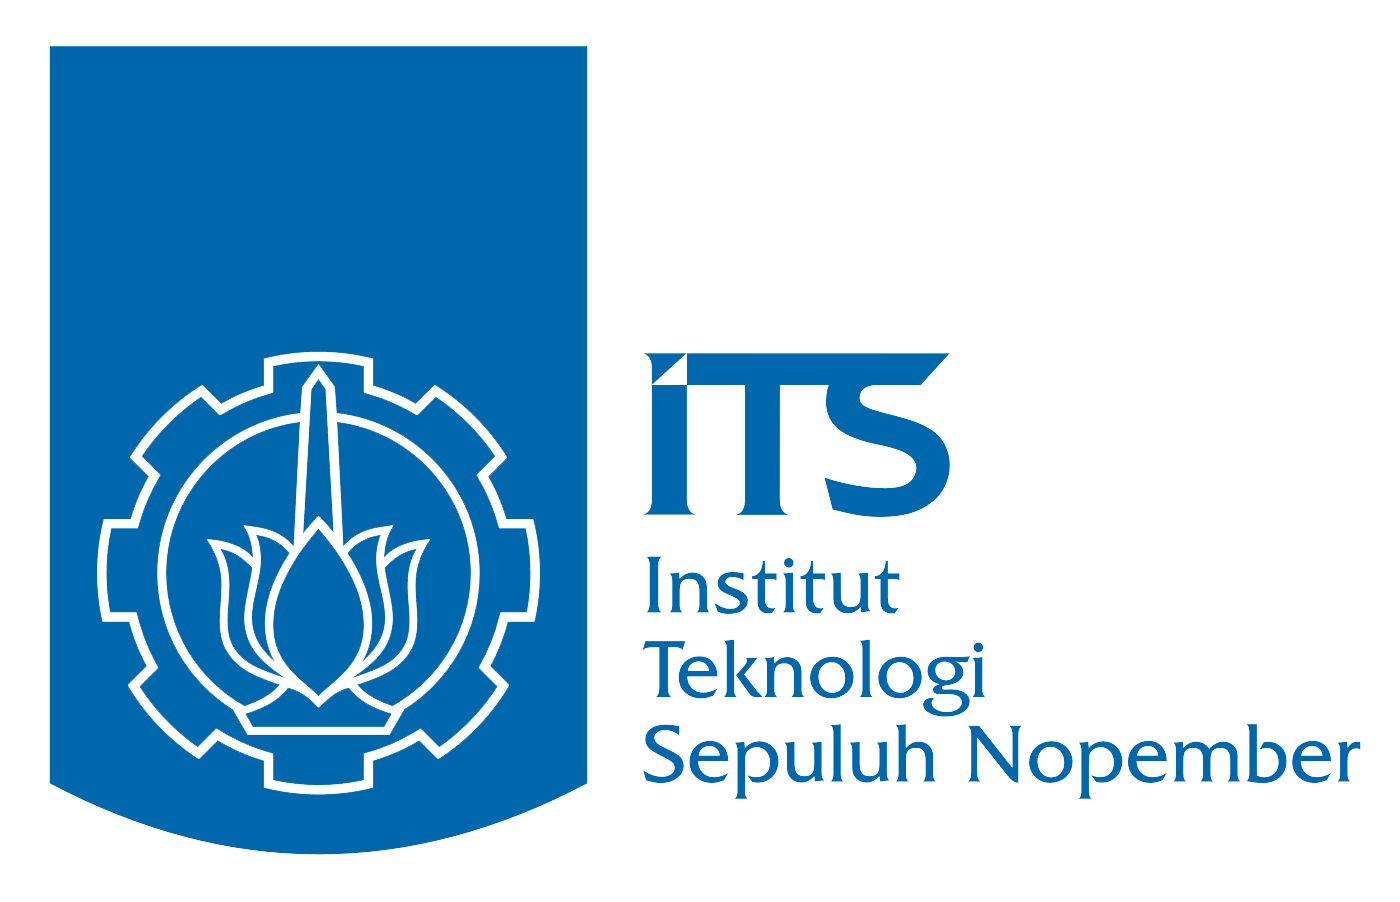 Sepuluh Nopember Institute of Technology